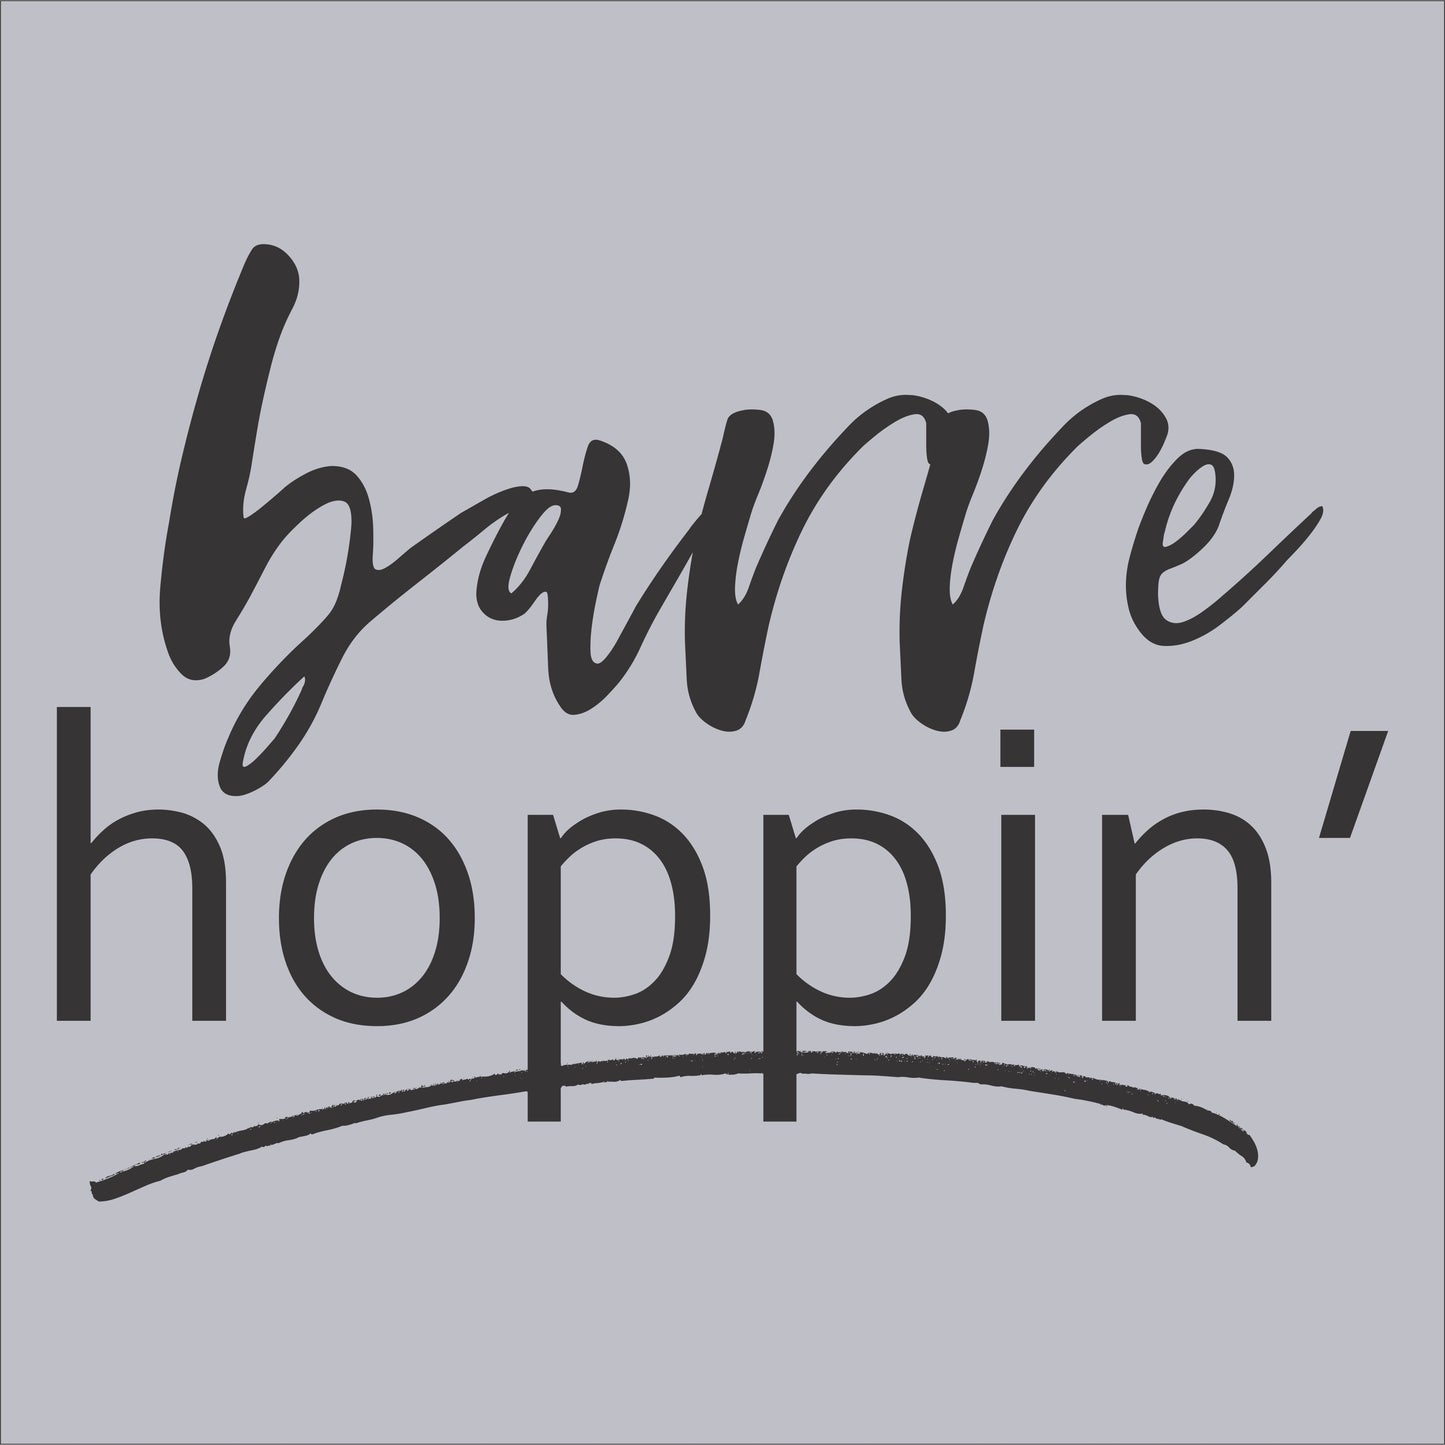 Barre Hoppin'